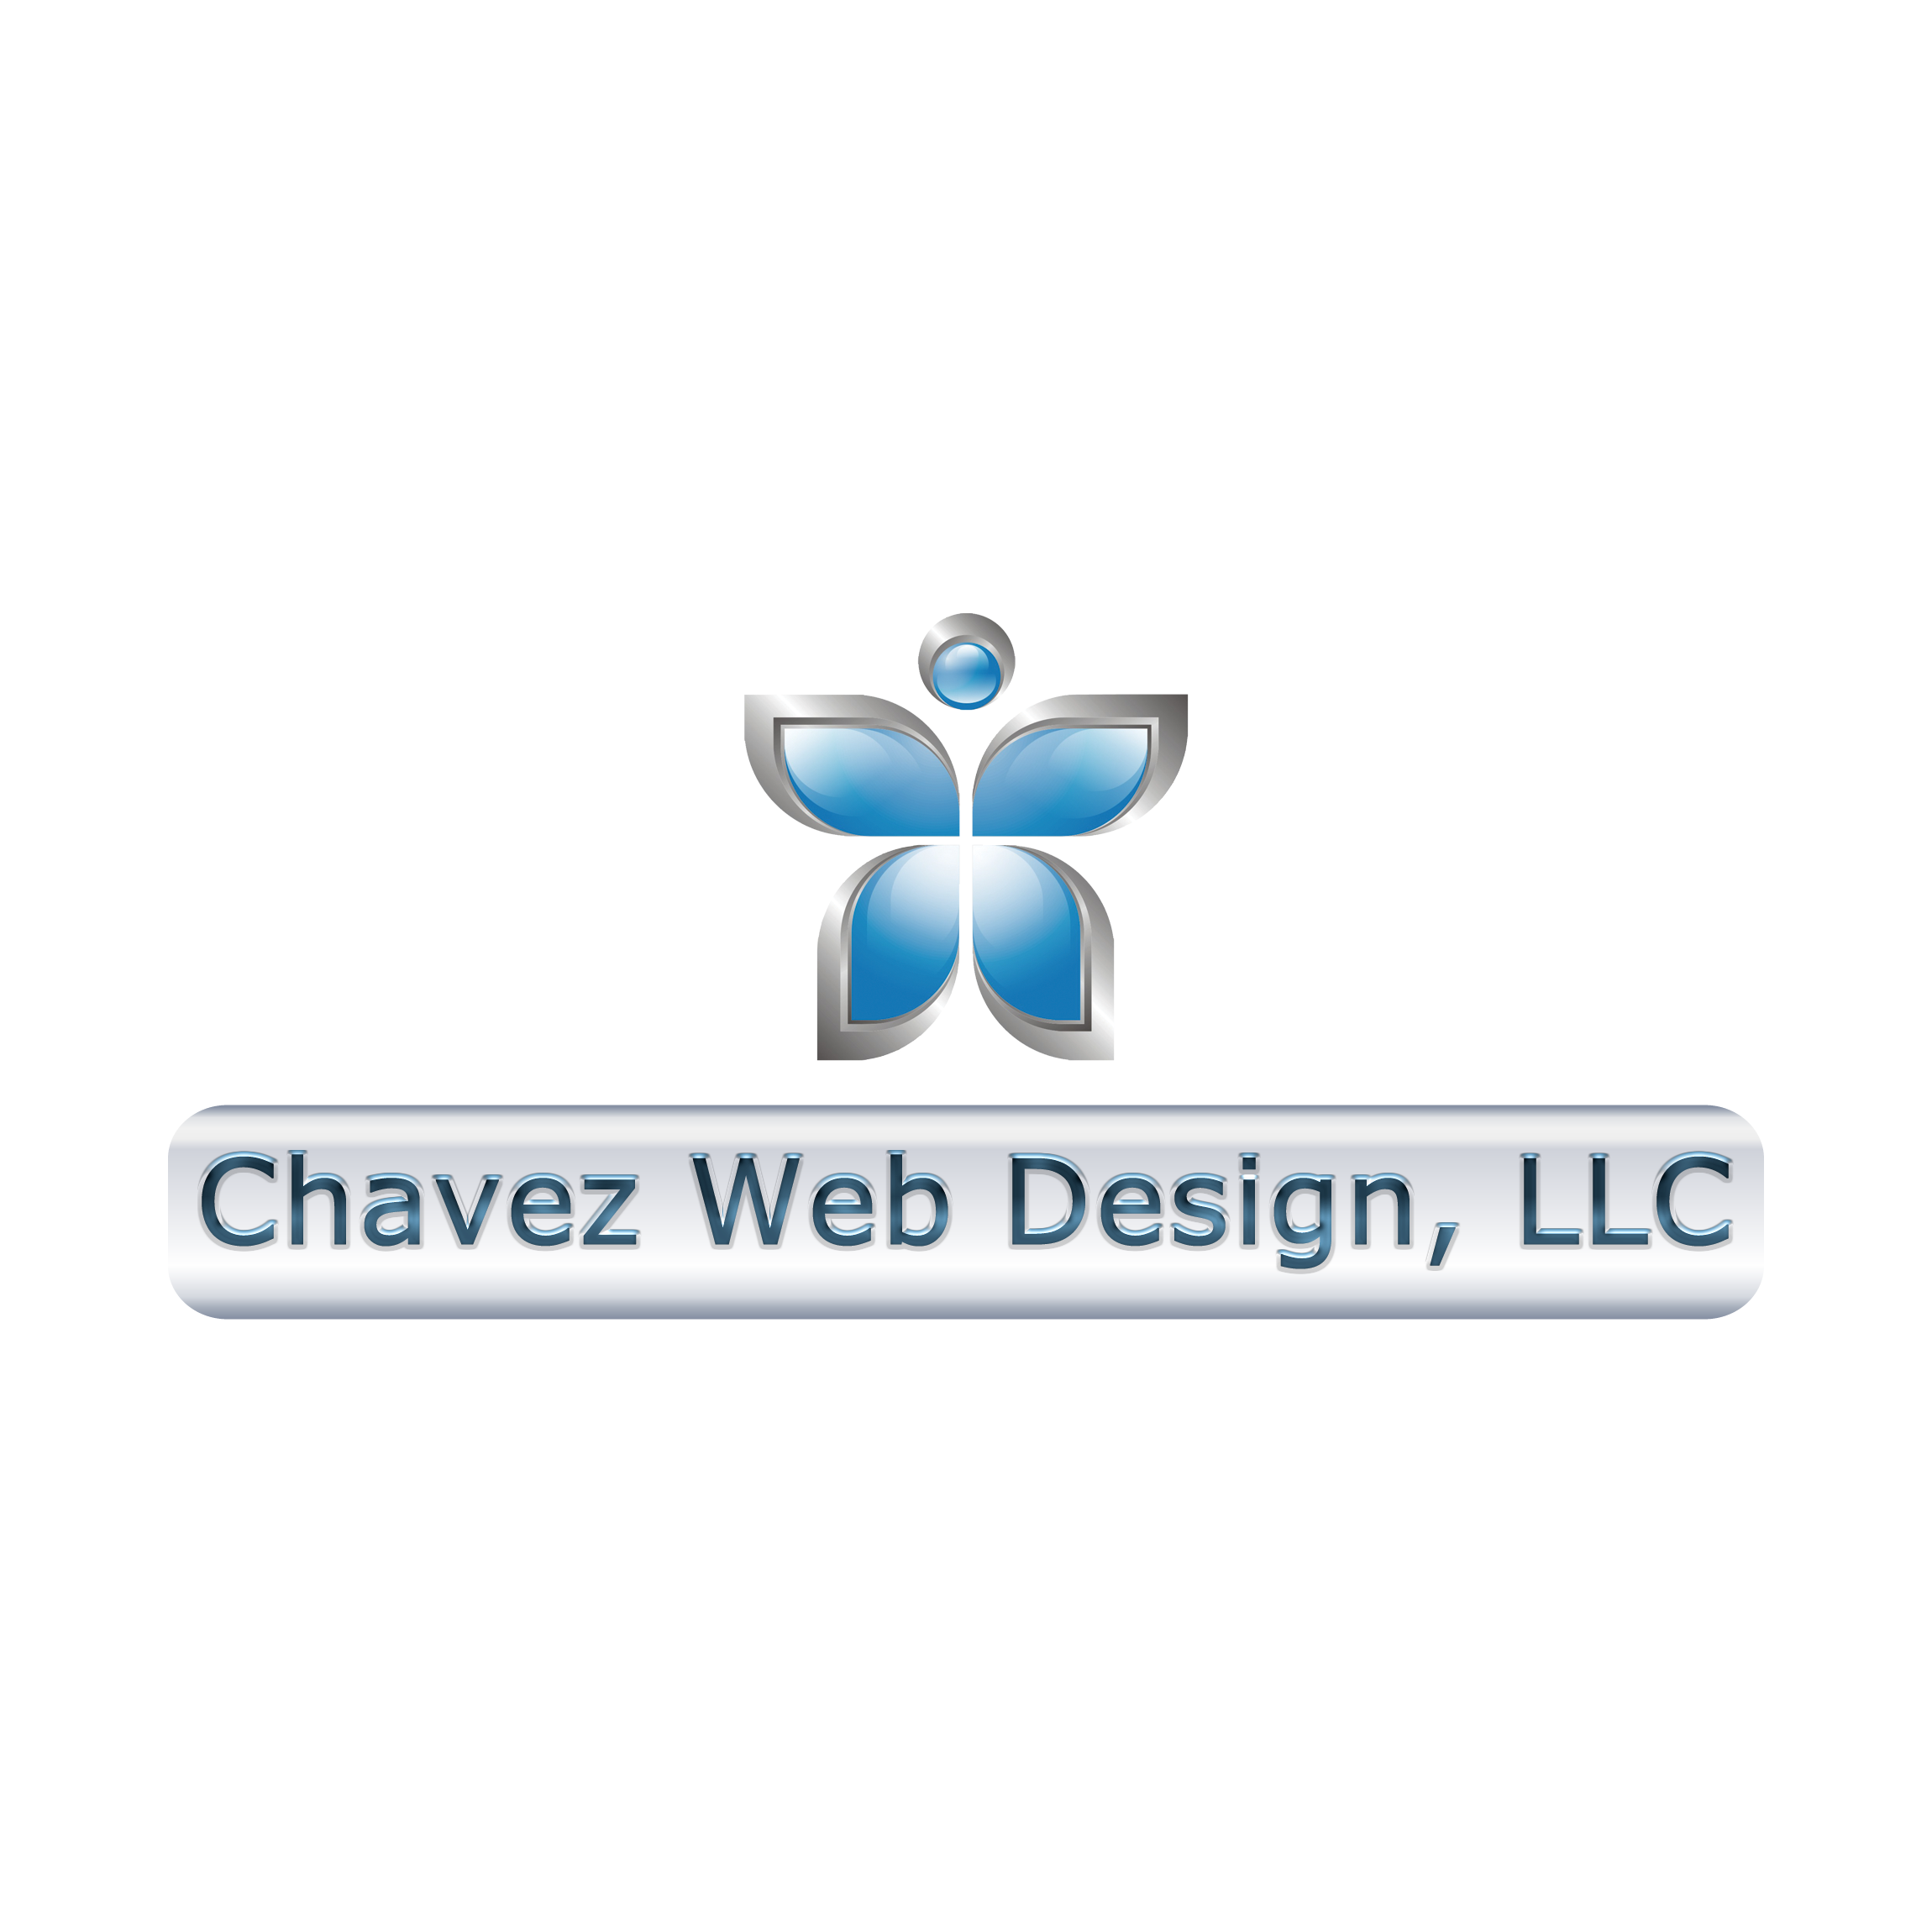 Chavez Web Design, LLC